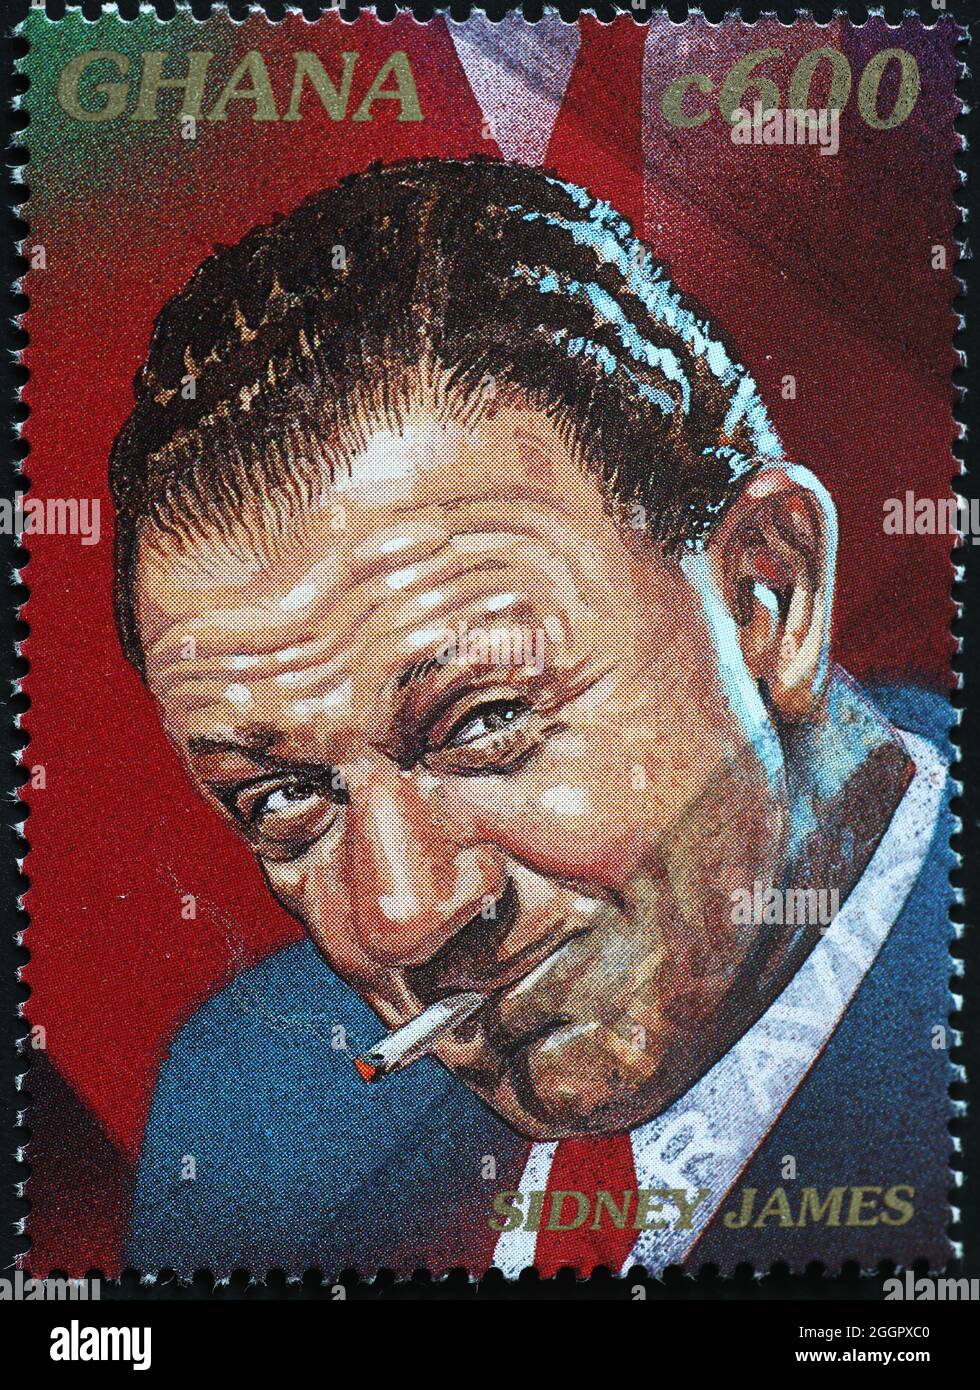 Sidney James portrait on postage stamp Stock Photo